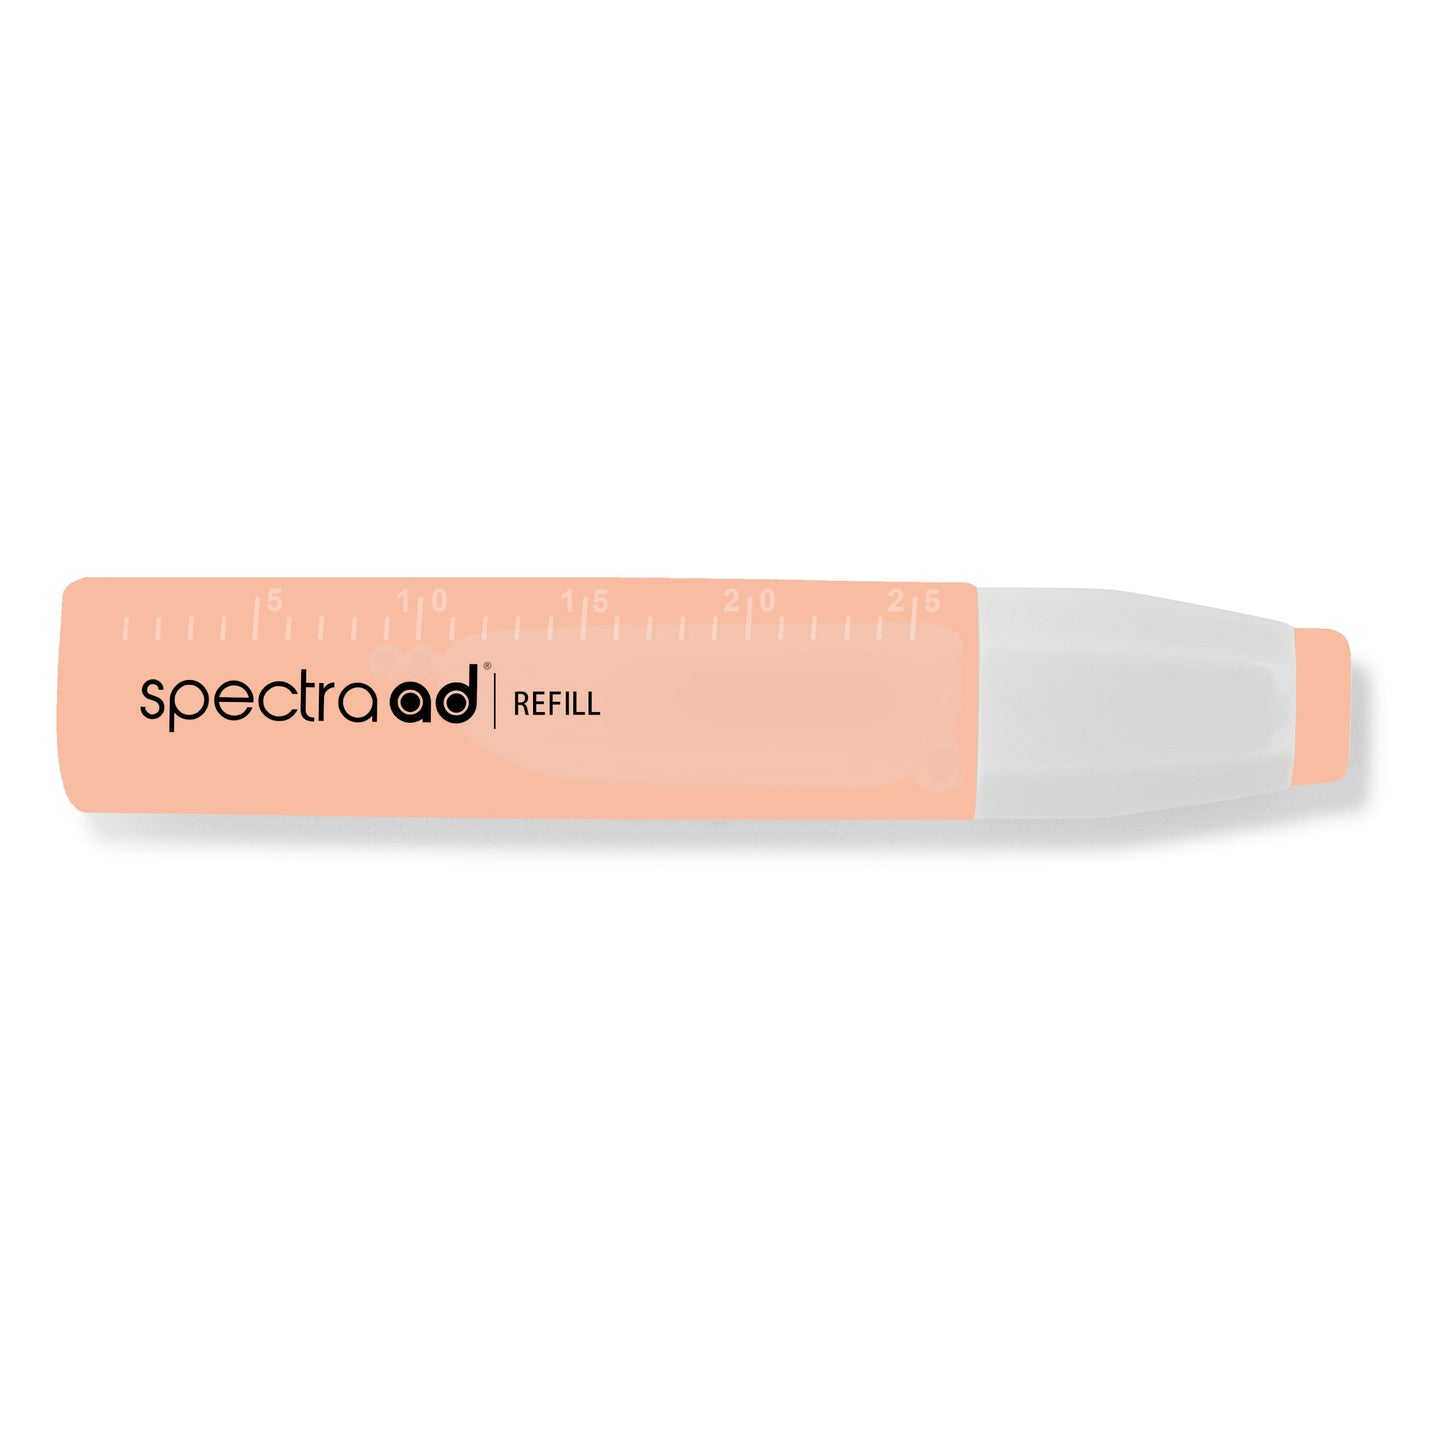 079 - Peach Blush - Spectra AD Refill Bottle